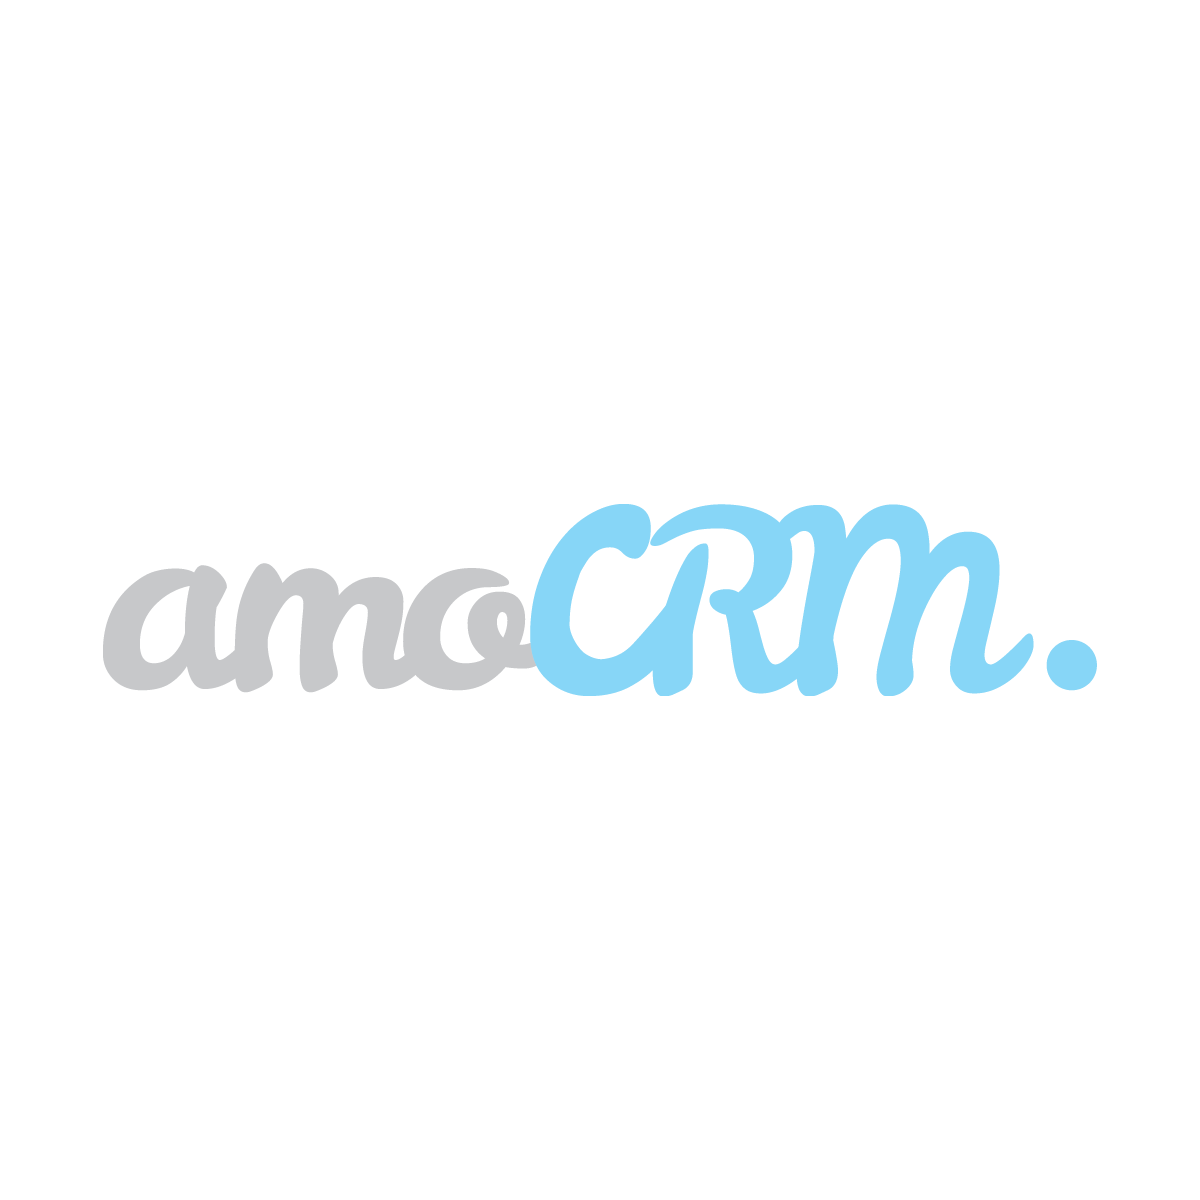  Best Cloud CRM Application Logo: amoCRM